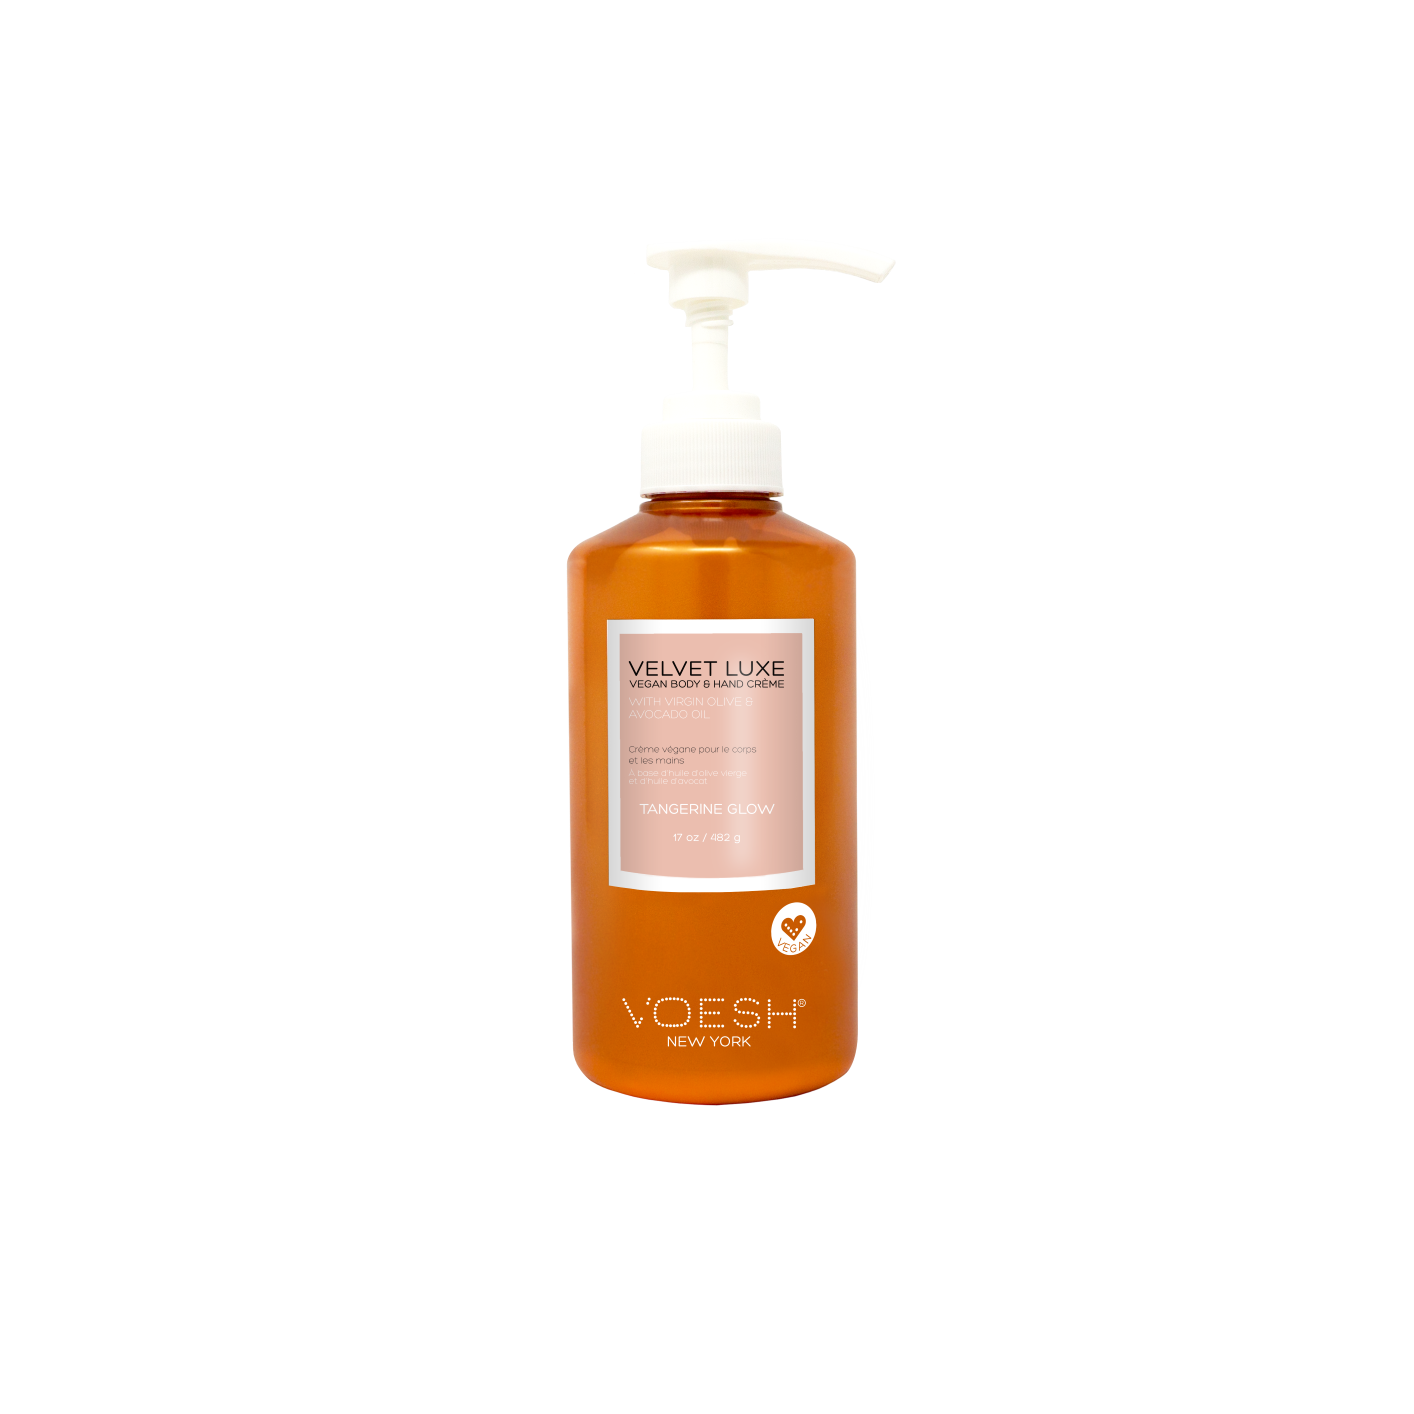 Velvet Luxe Vegan Håndcreme - Tangerine Glow-SPA-VOESH-482-NR Kosmetik